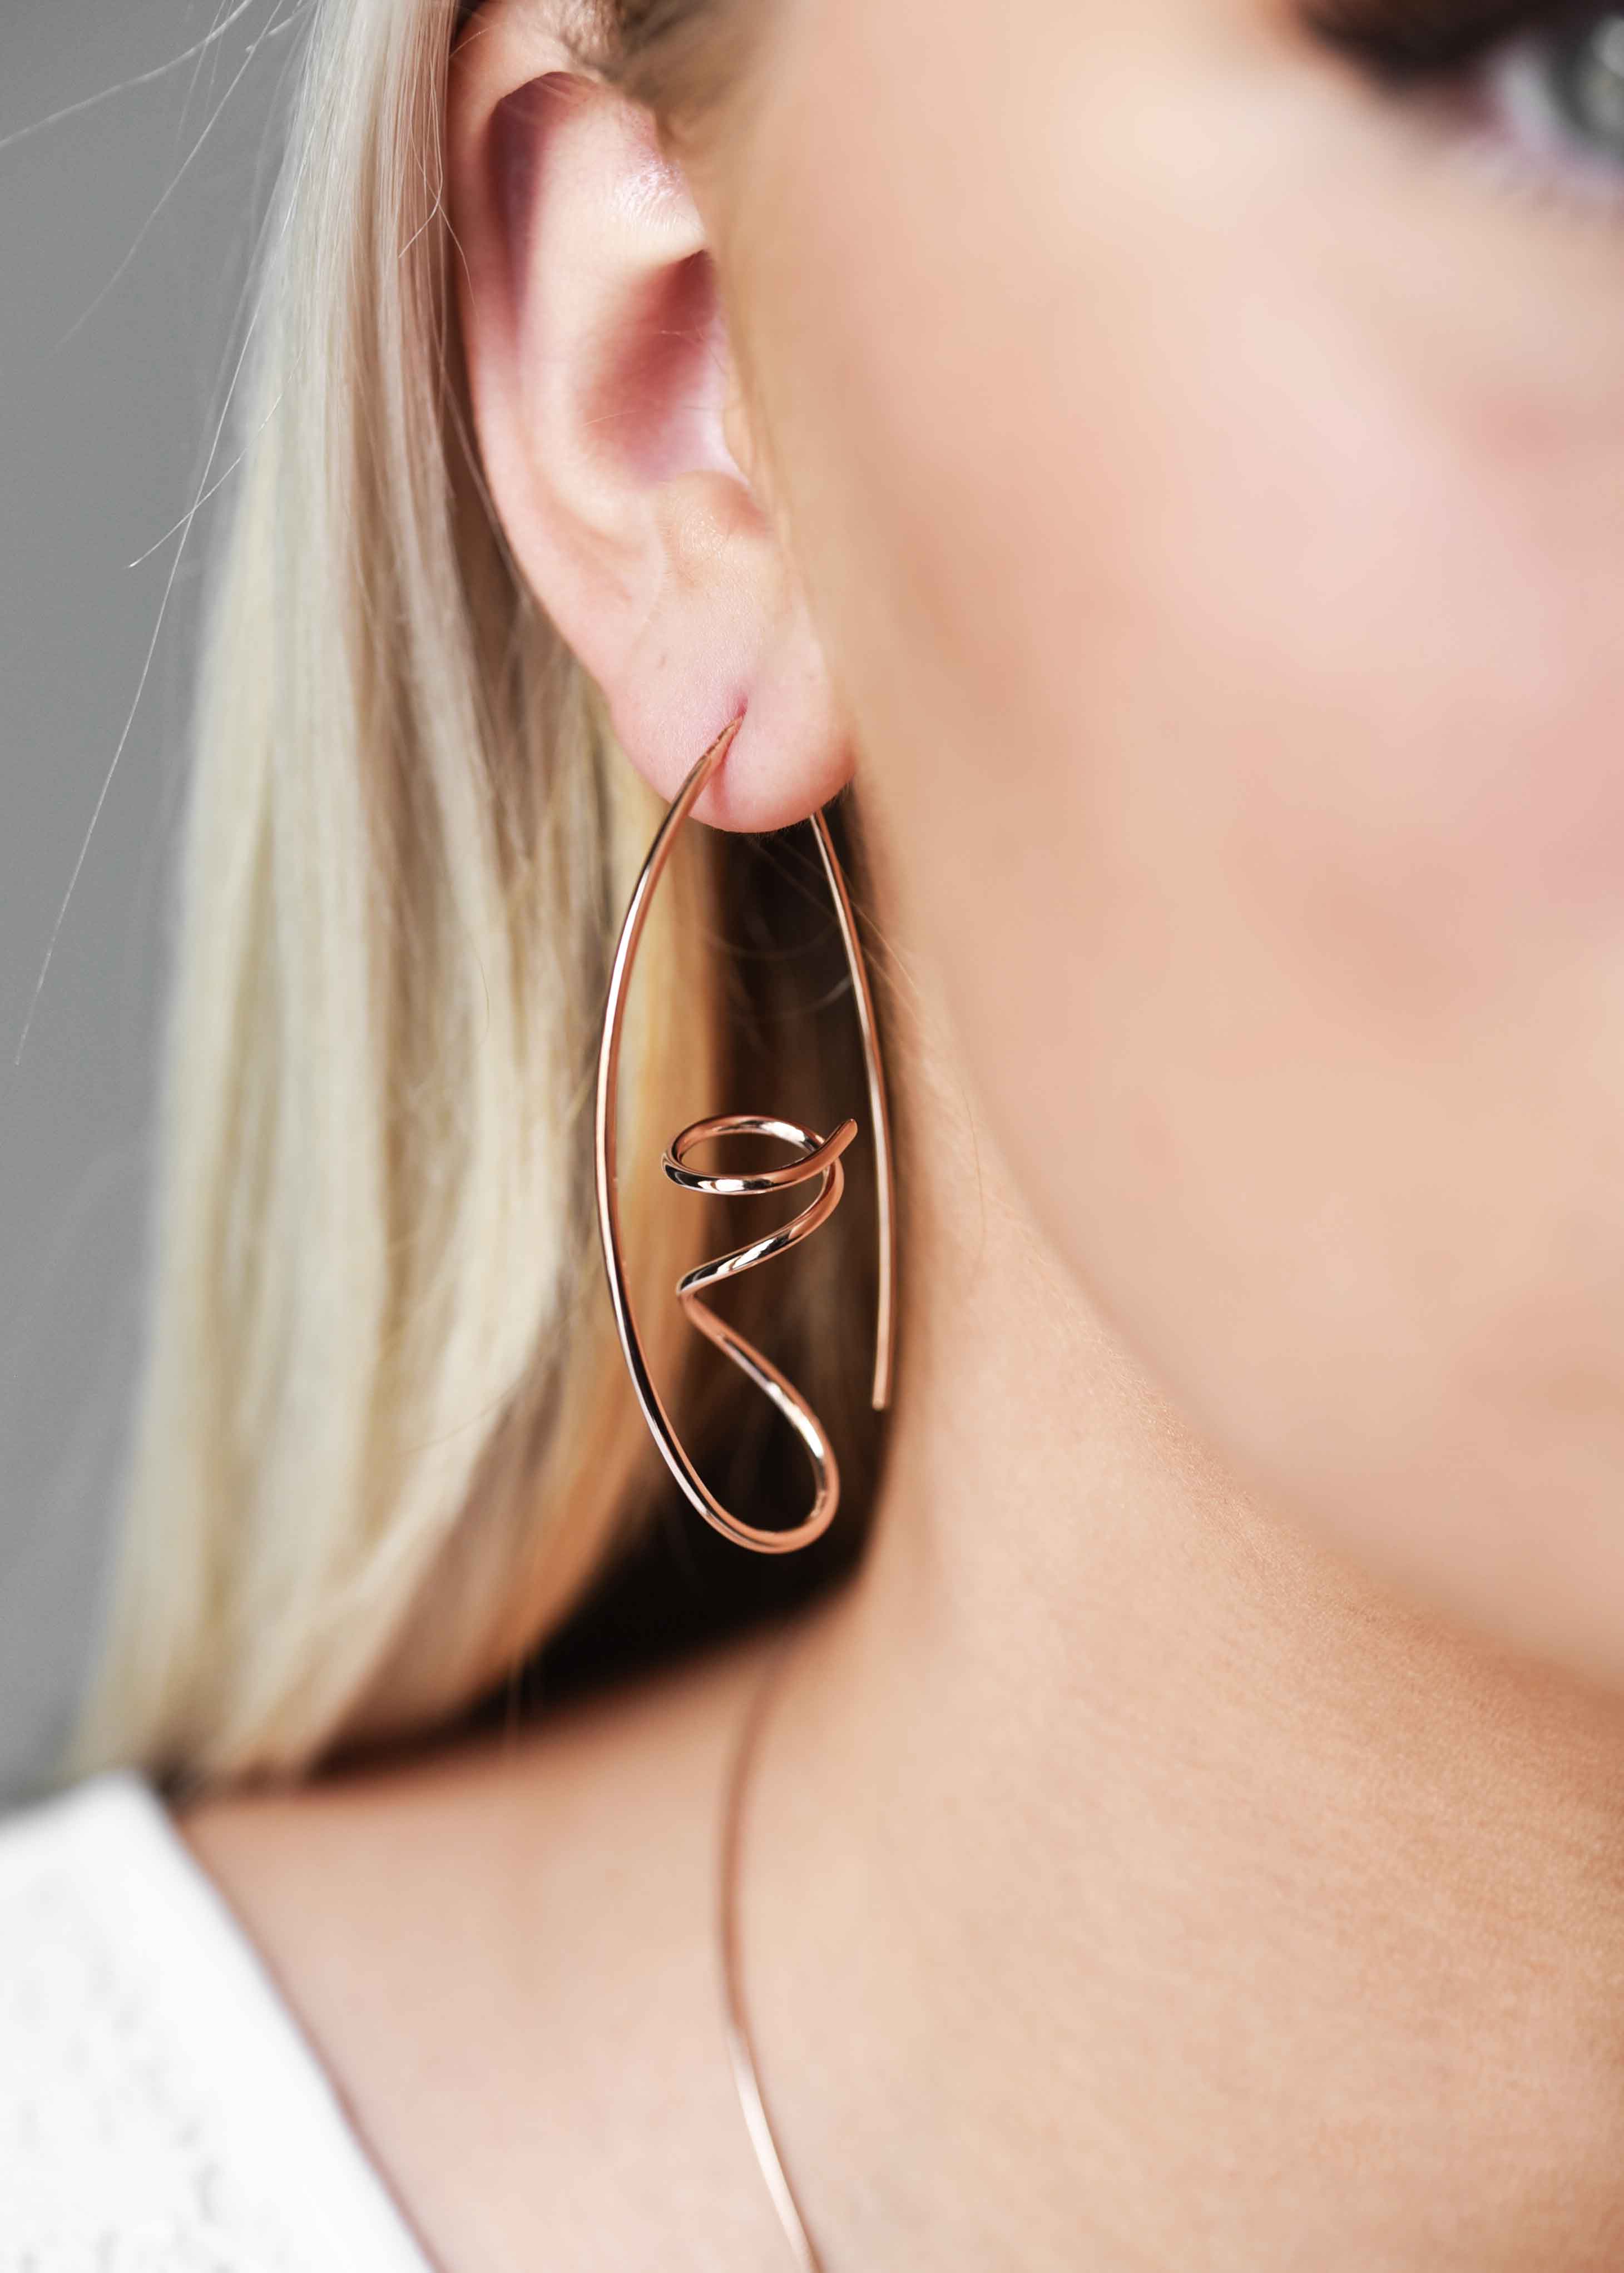 Geometric Gold Earrings large hoops modern statement